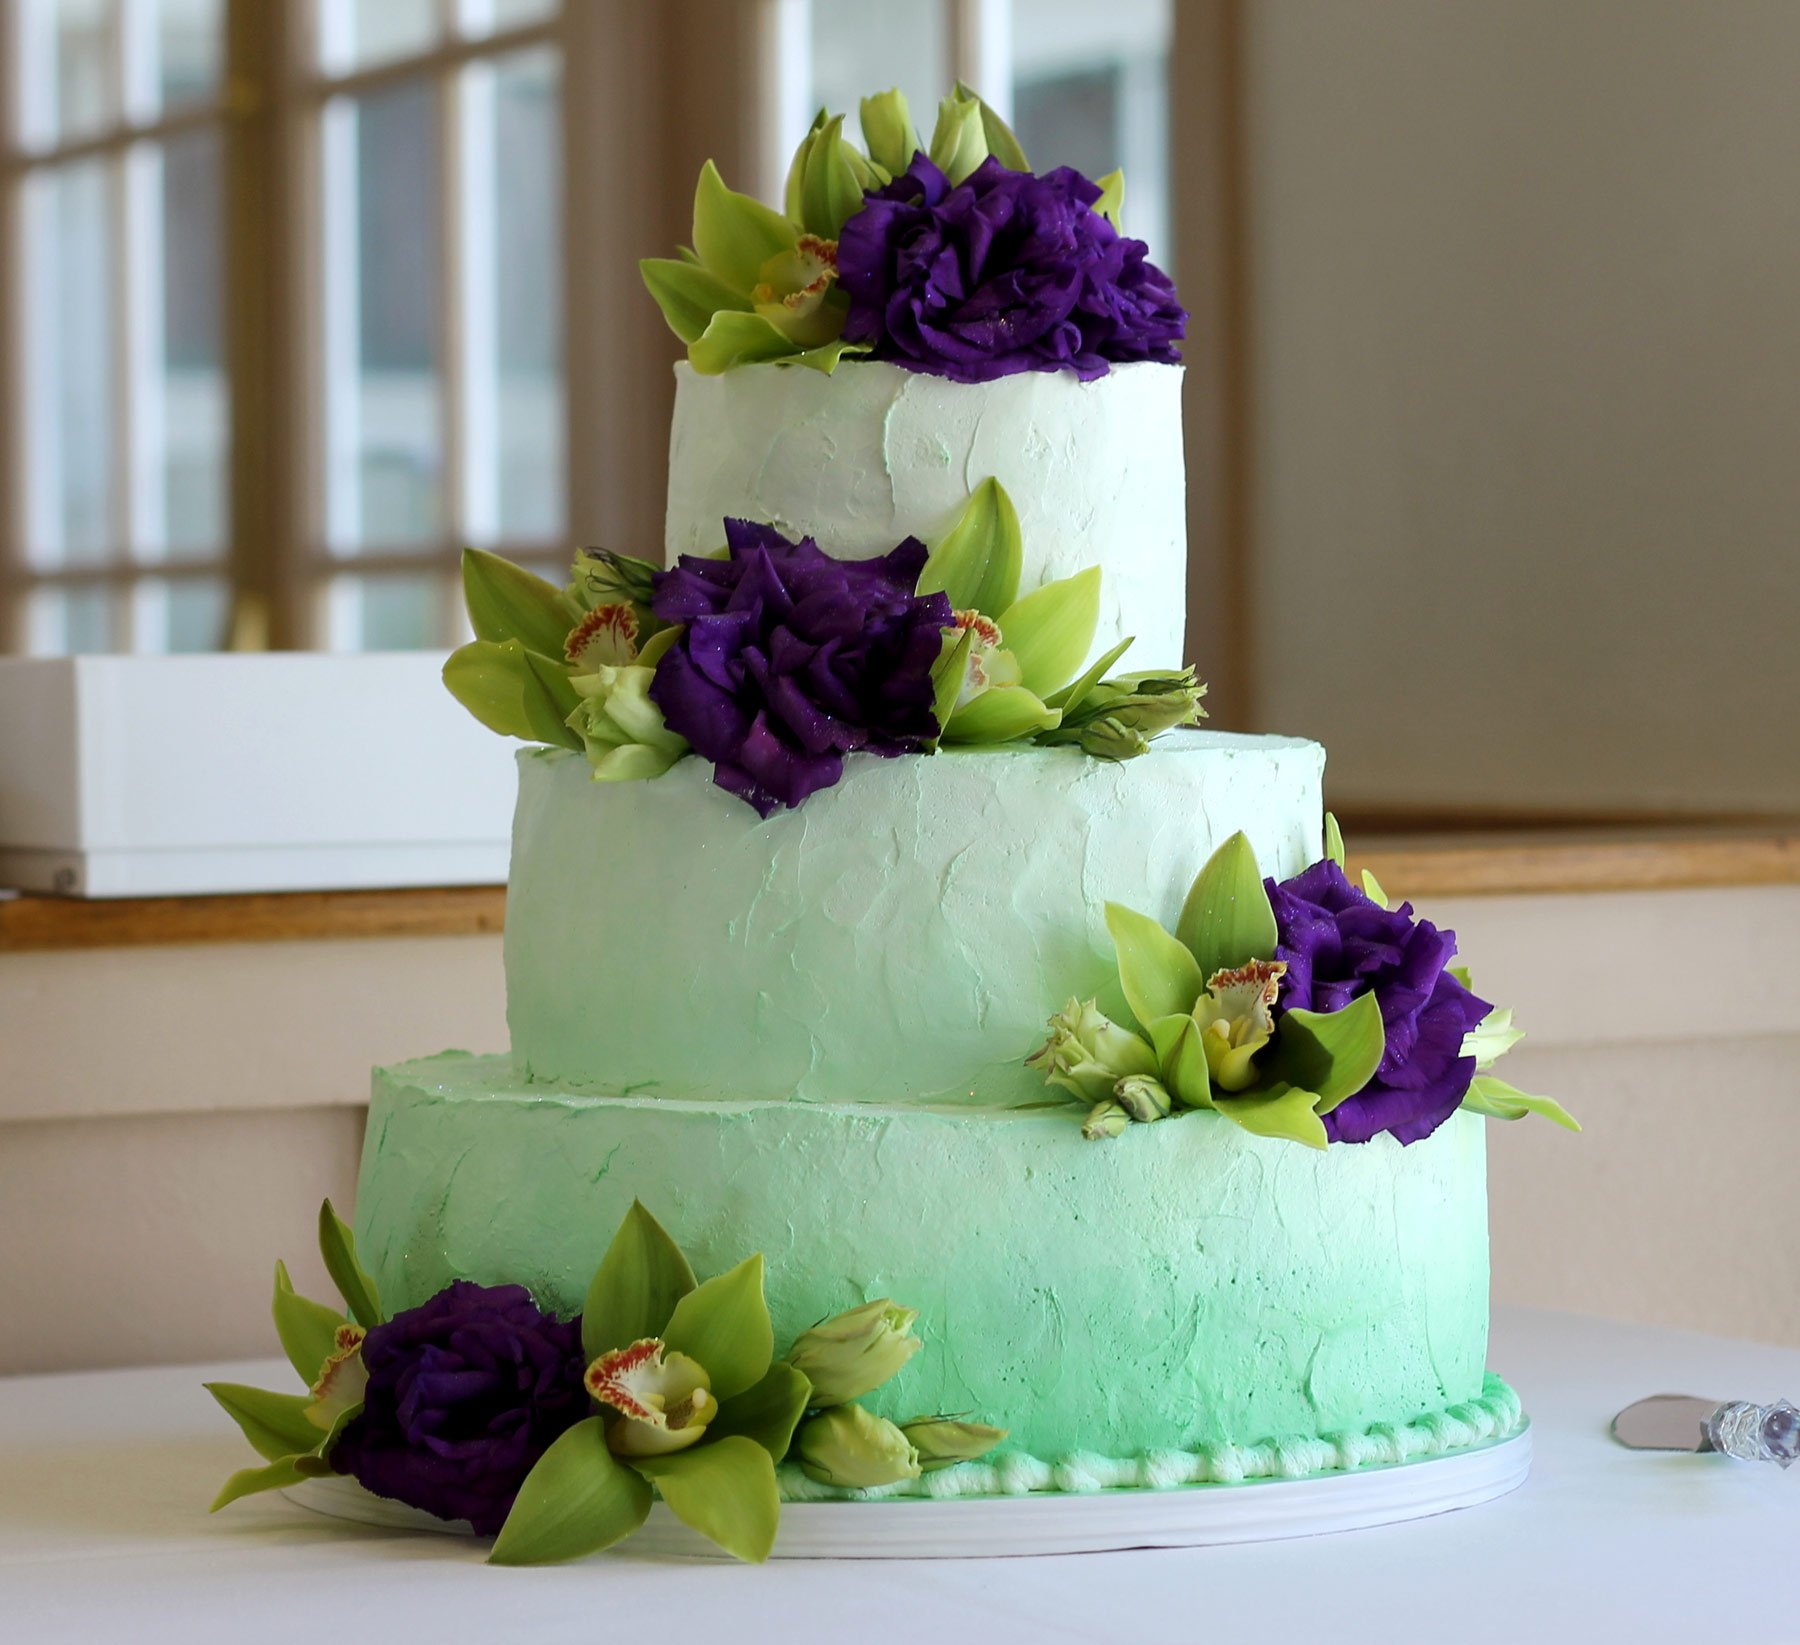 http://www.pattys-cakes.com/wp-content/uploads/2013/11/green-ombre-wedding-cake.jpg